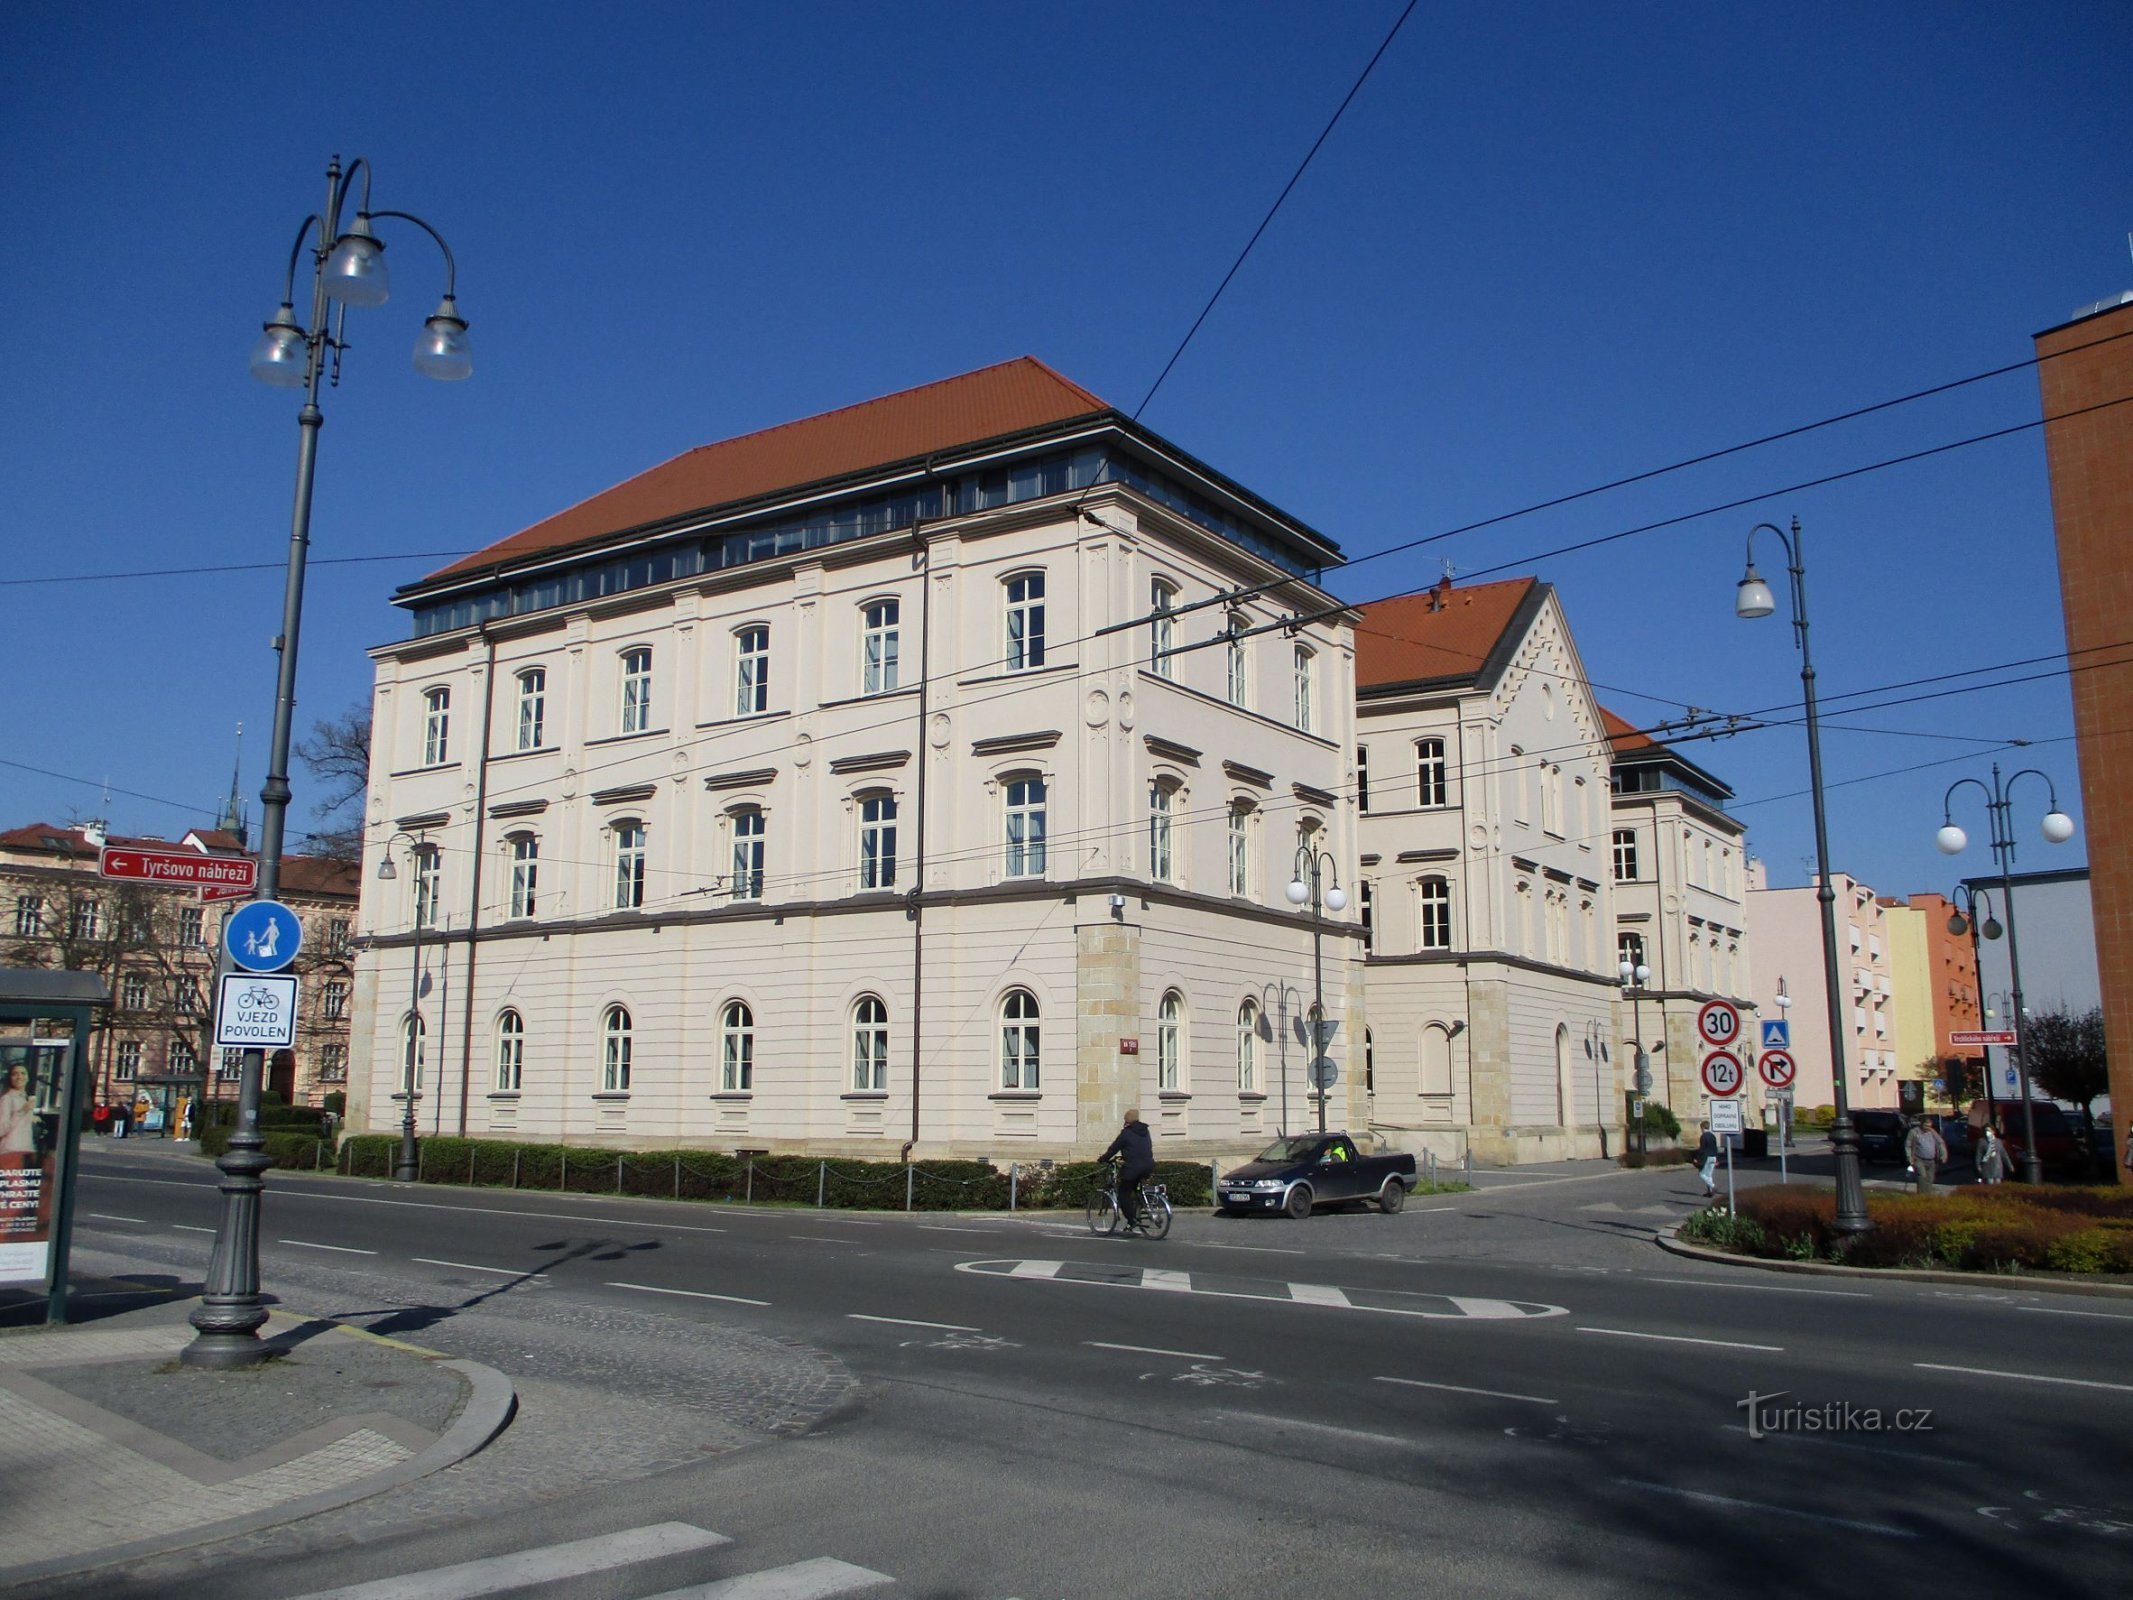 Trg Komenskega št. 120 (Pardubice, 27.4.2021. XNUMX. XNUMX)